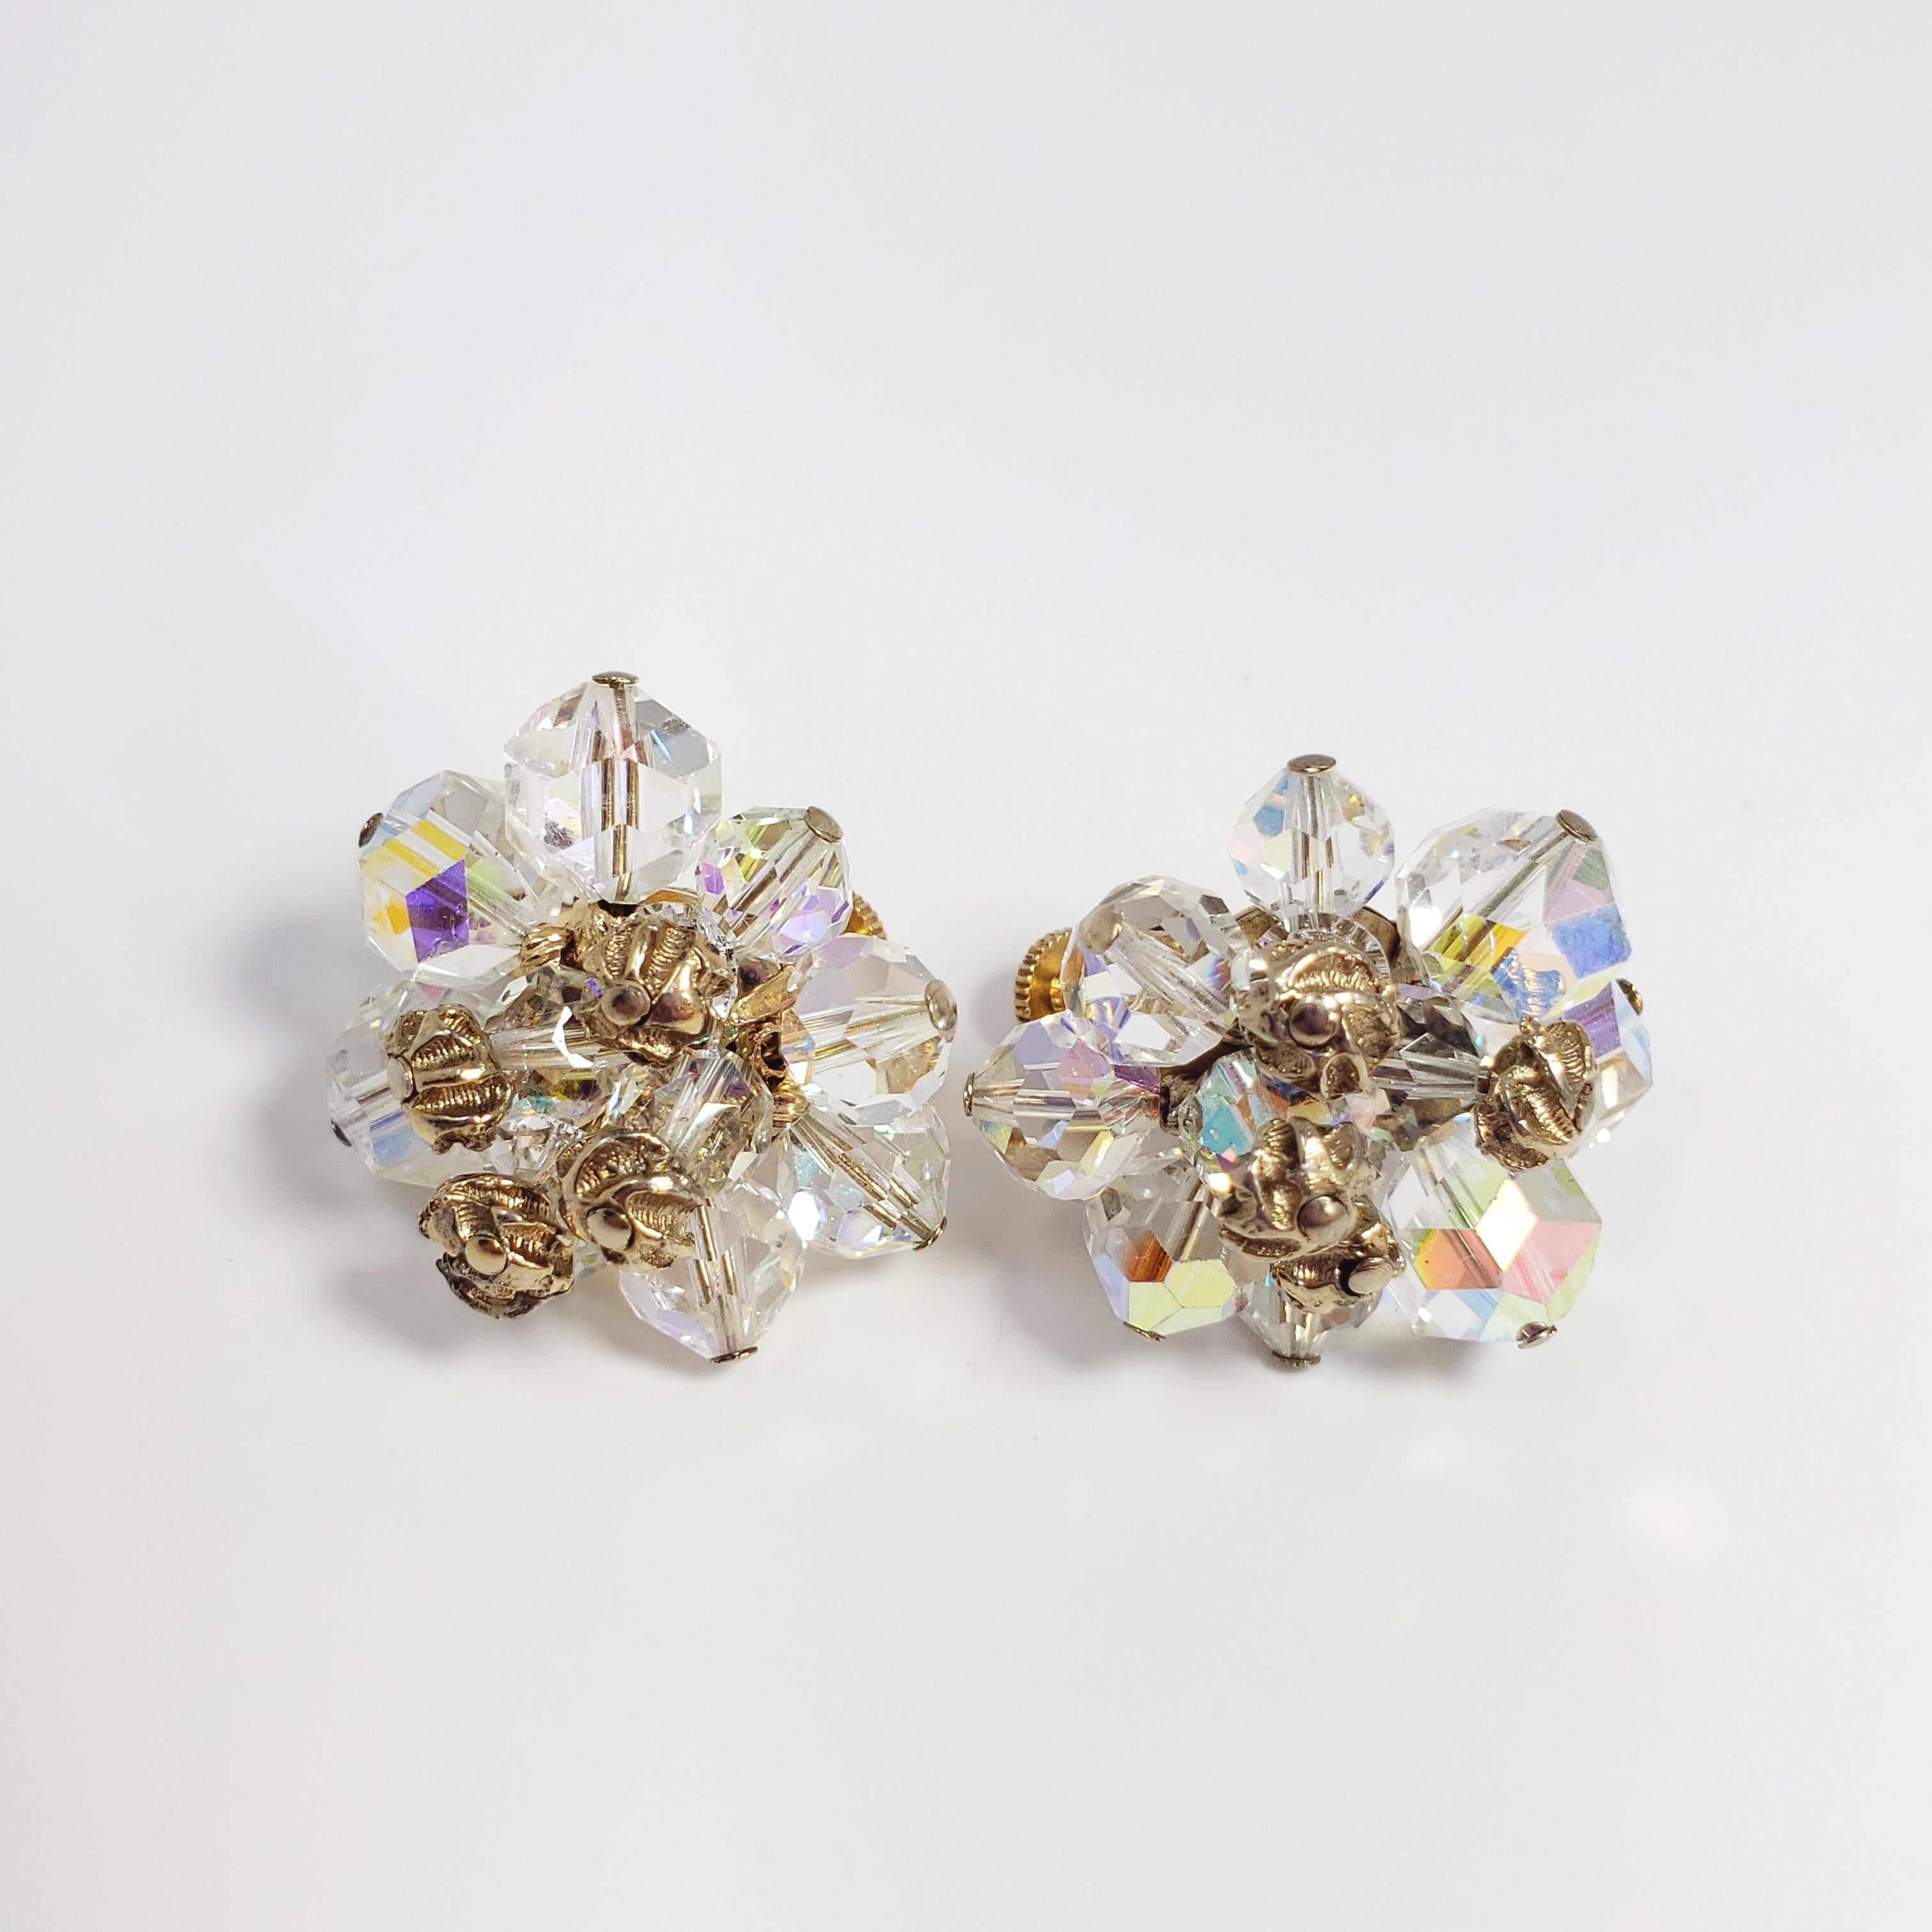 Vendome Aurora Borealis Crystal Demi Parure Three Strand Necklace and Earrings 2